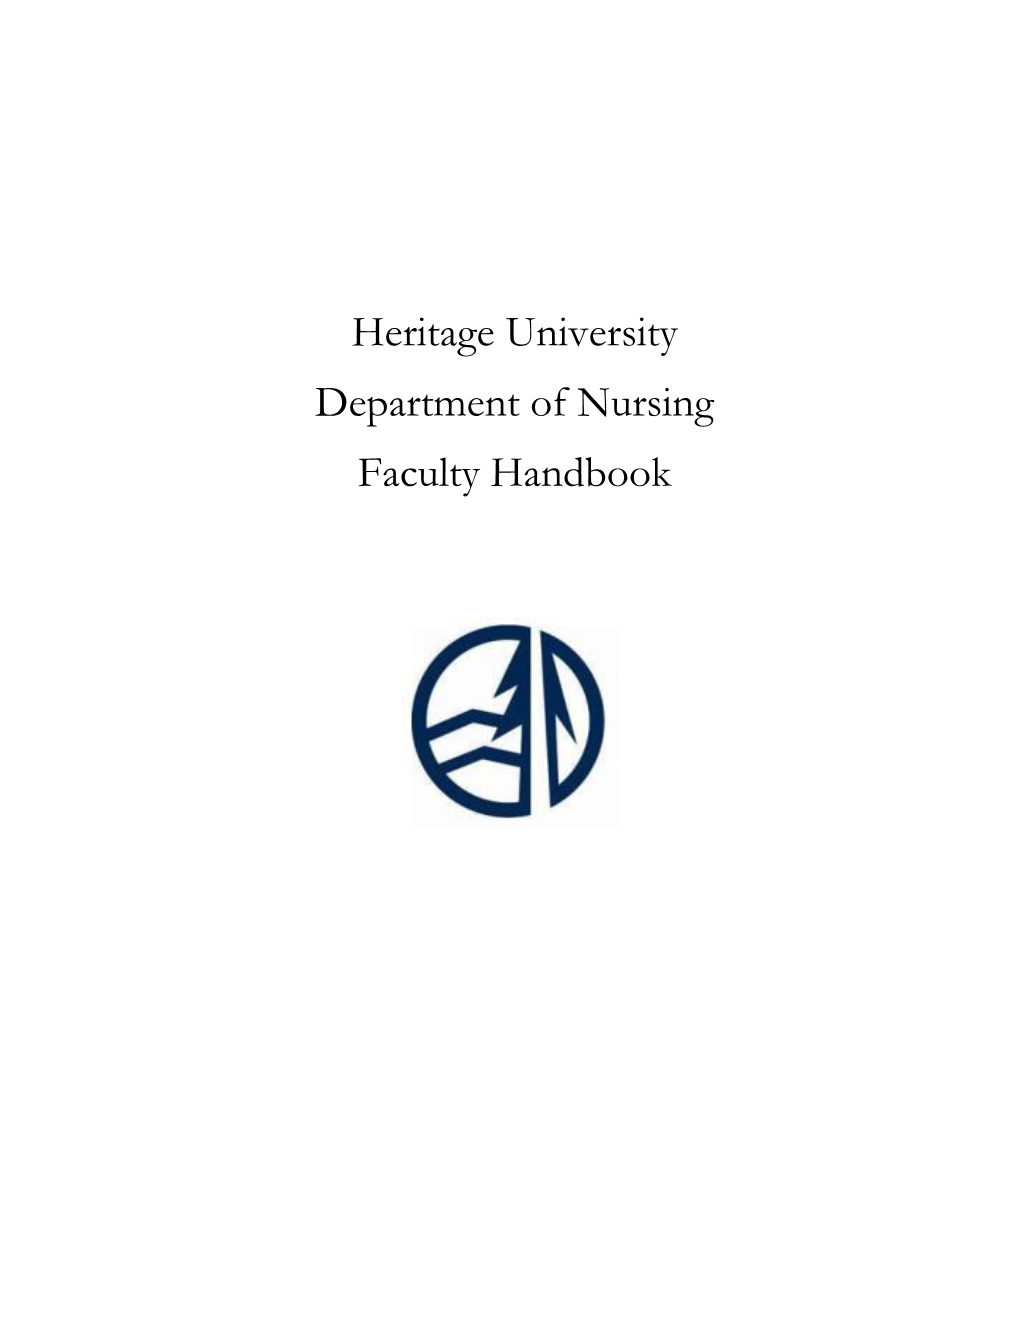 Heritage University Department of Nursing Faculty Handbook